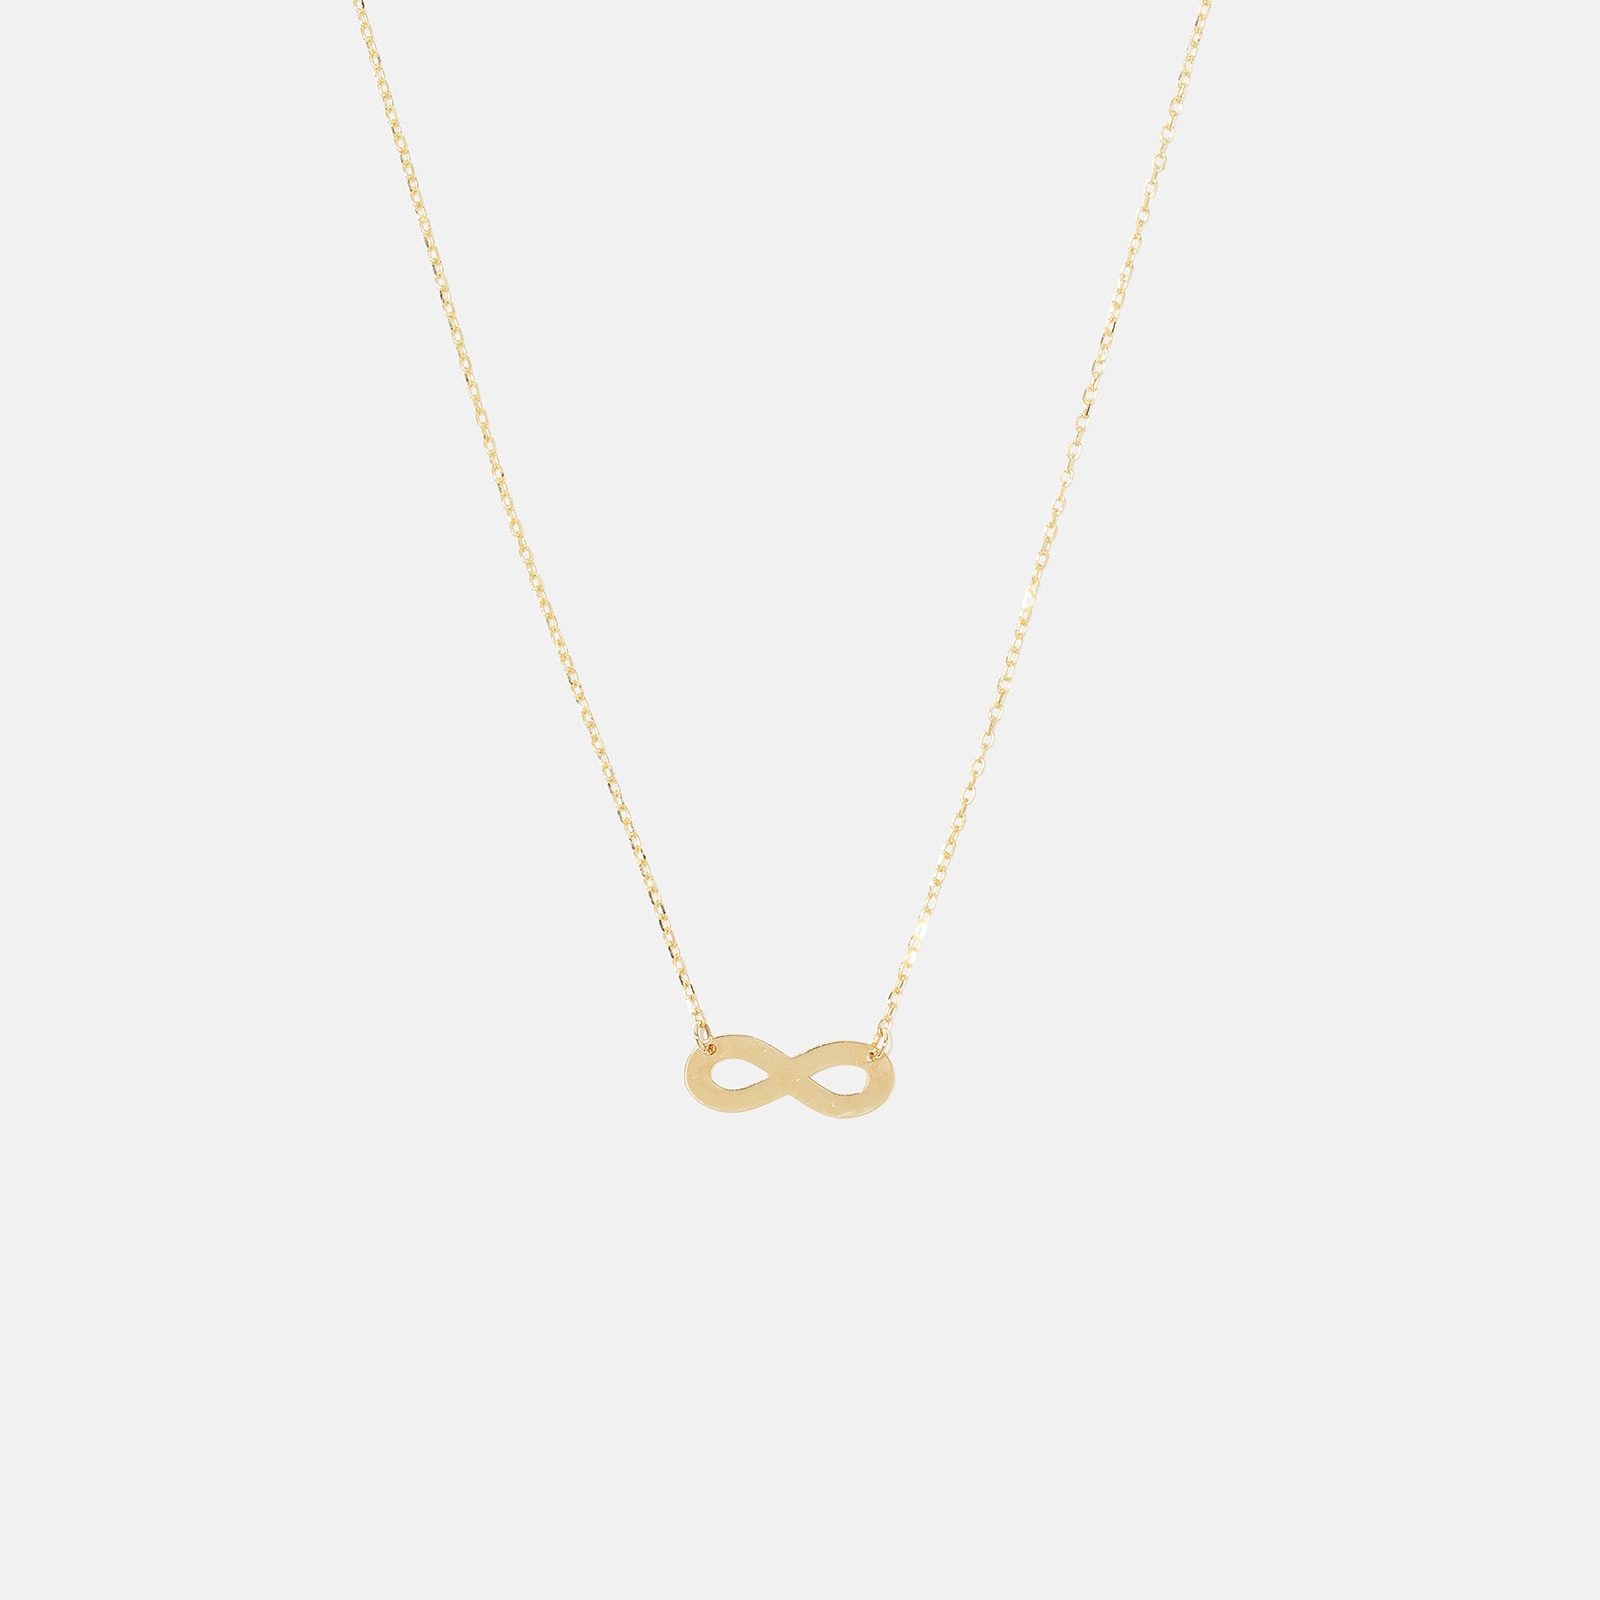 Halsband 18k guld, Infinitysymbol - 42+3 cm